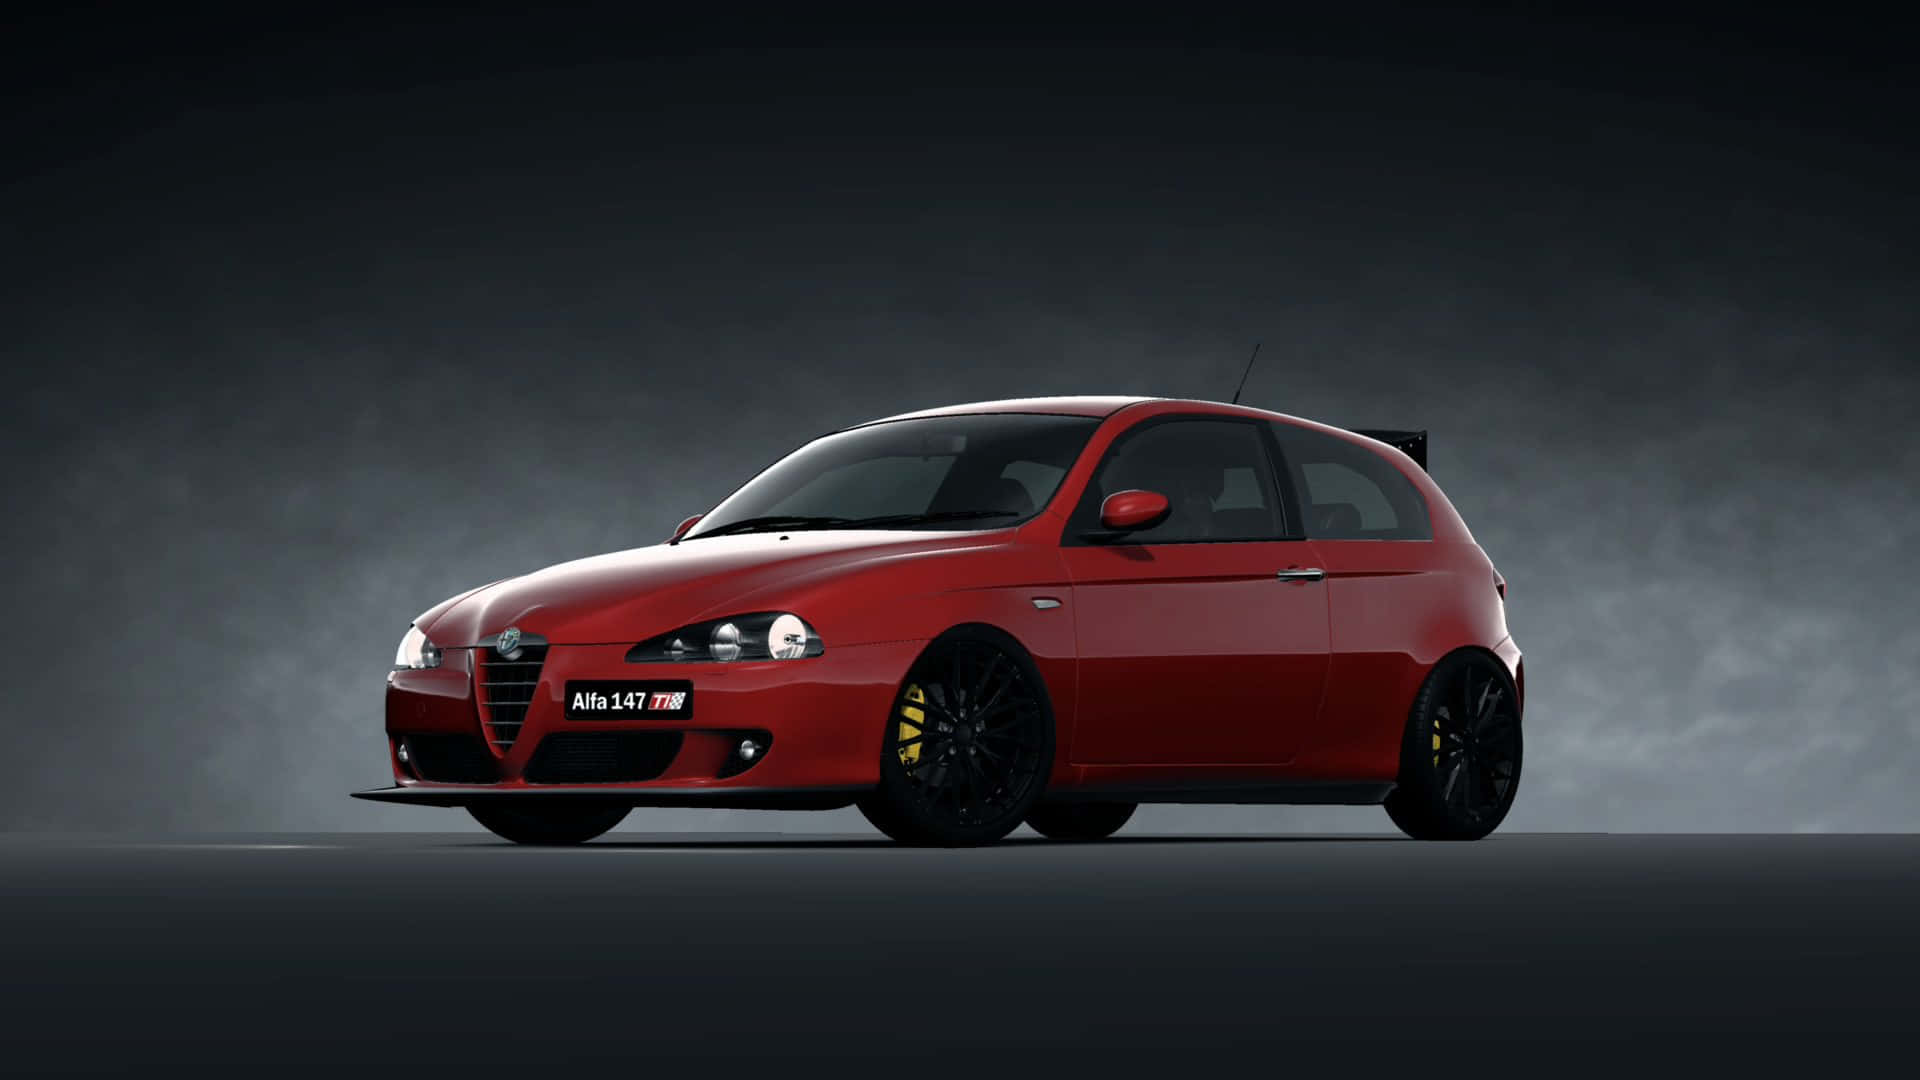 Sleek Alfa Romeo 147 on Display Wallpaper